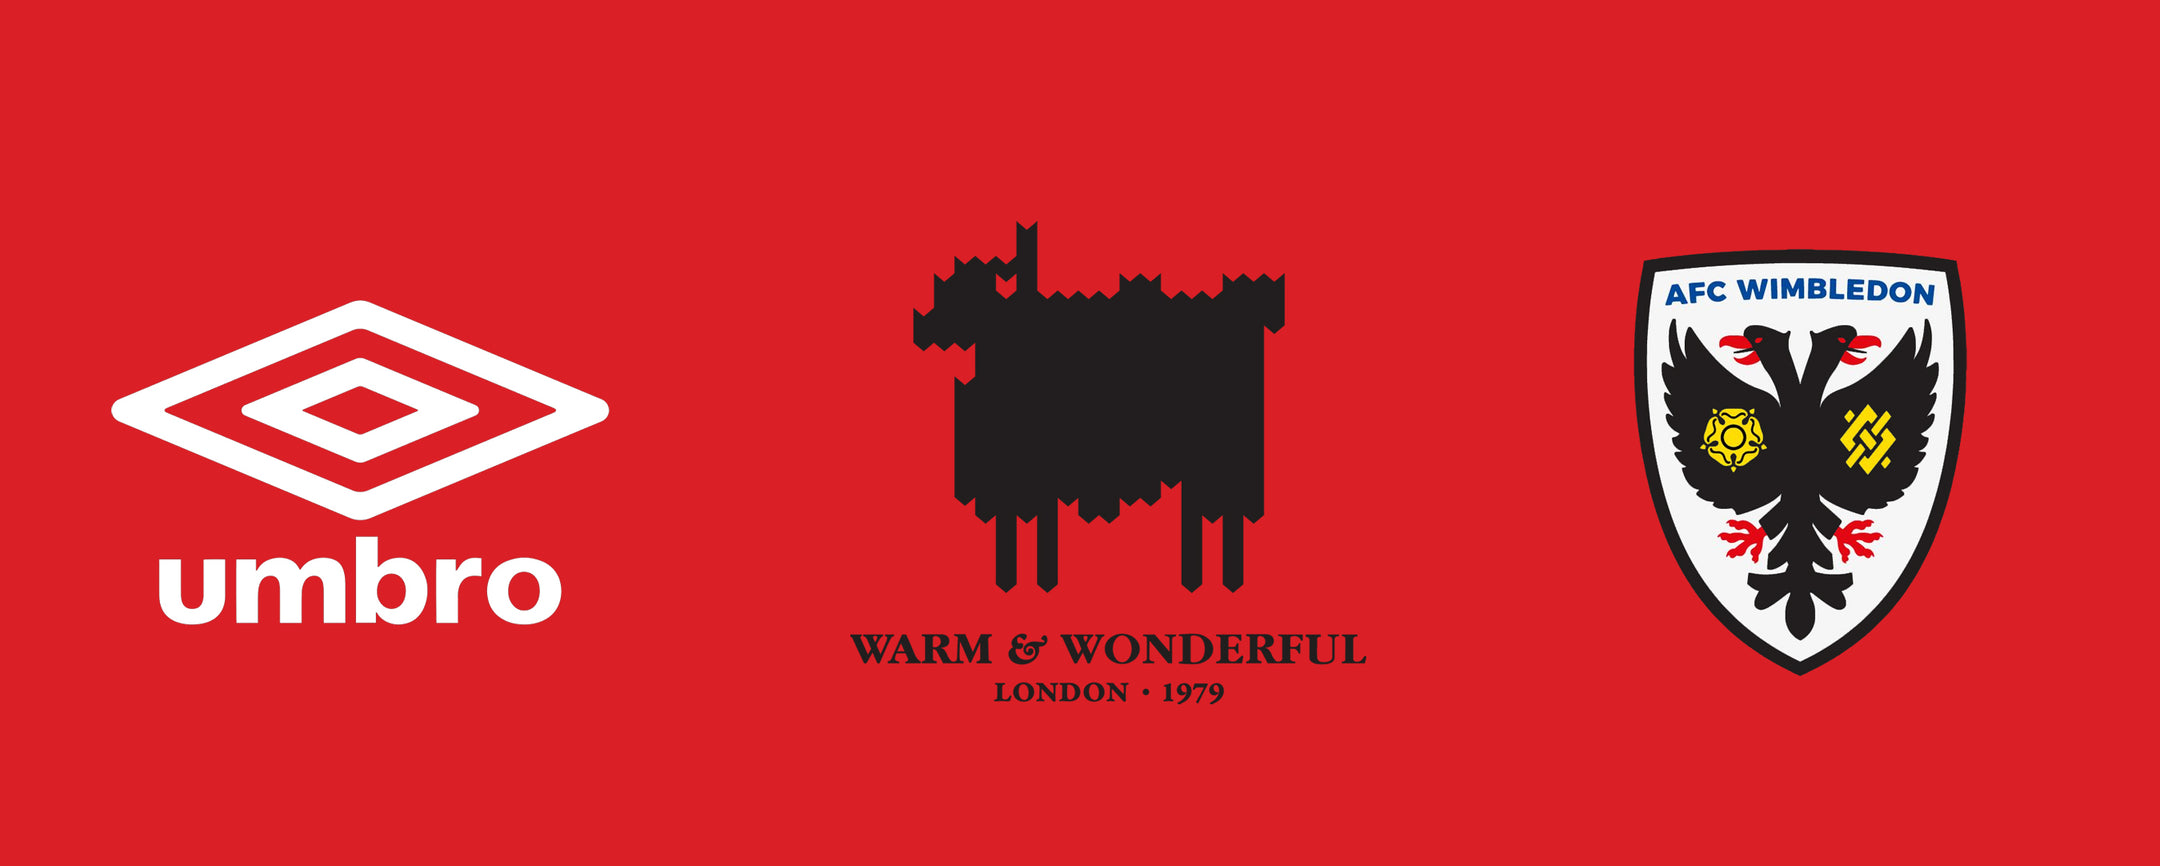 WARM & WONDERFUL X AFC WIMBLEDON “BLACK SHEEP” UMBRO JERSEY